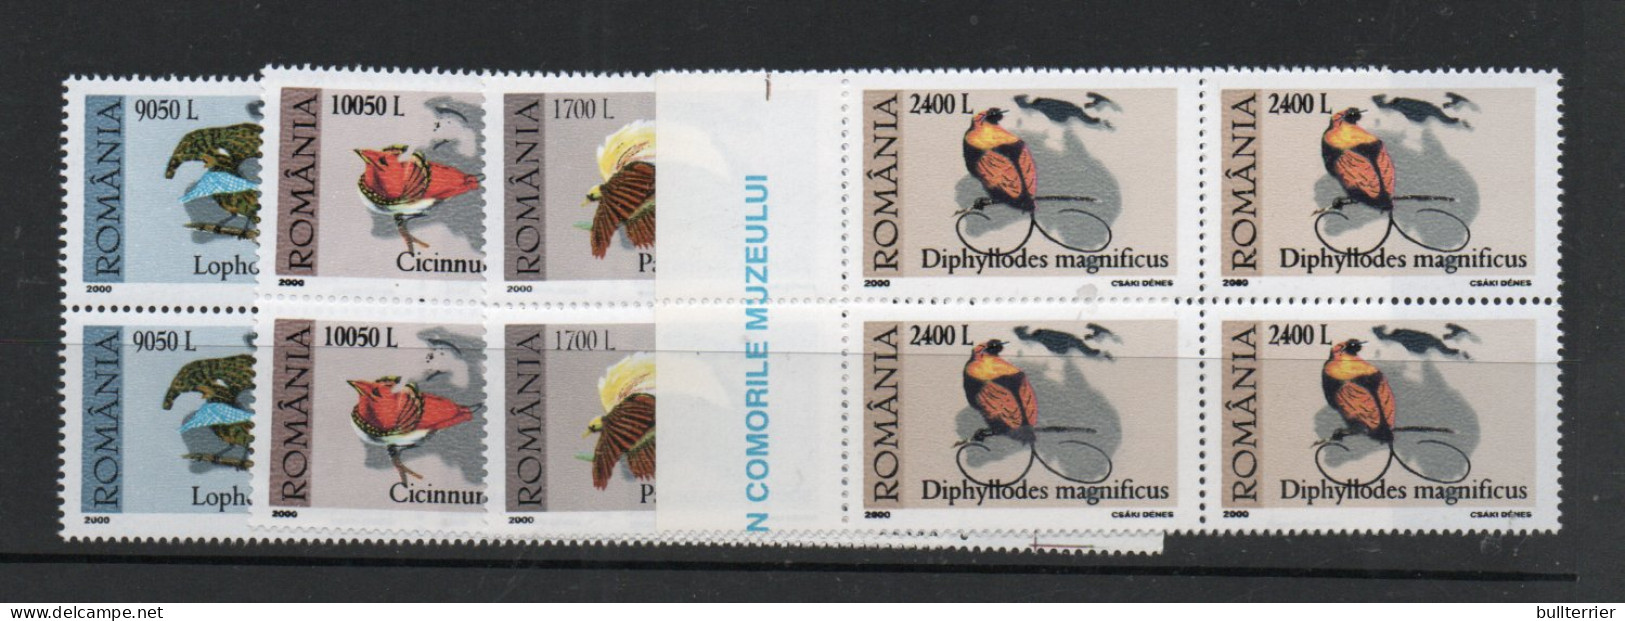 BIRDS  -  ROMANIA - 2000 - BIRDS OF PARADISE  SET OF 4 IN BLOCKS OF 4  MINT NEVER HINGED, SG CAT £23.60 - Palomas, Tórtolas